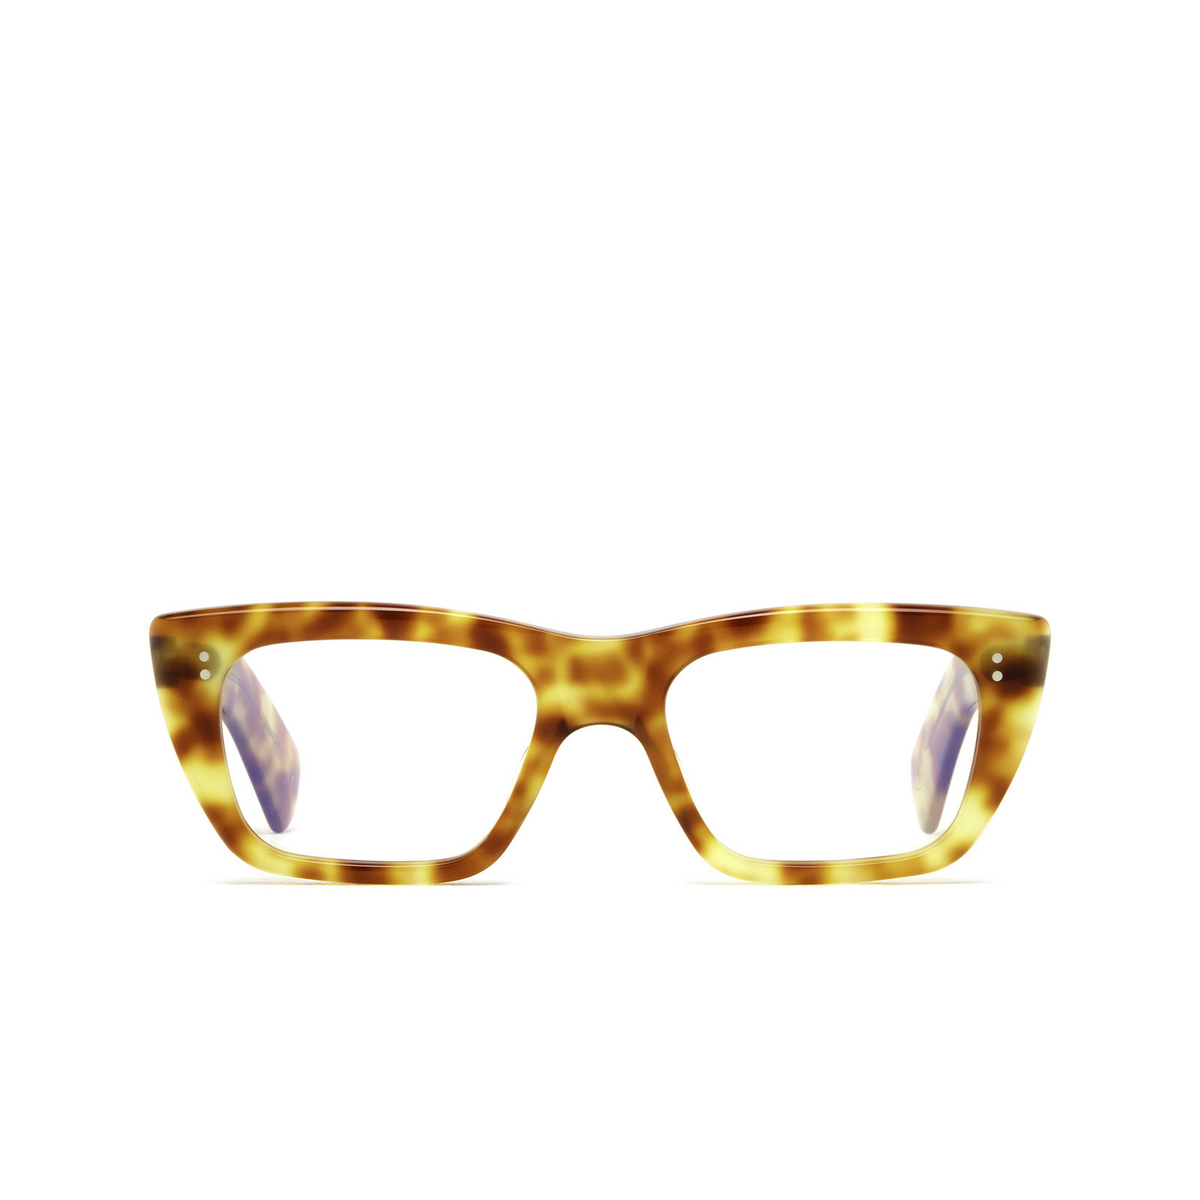 Lesca DOXA Eyeglasses Blond - front view